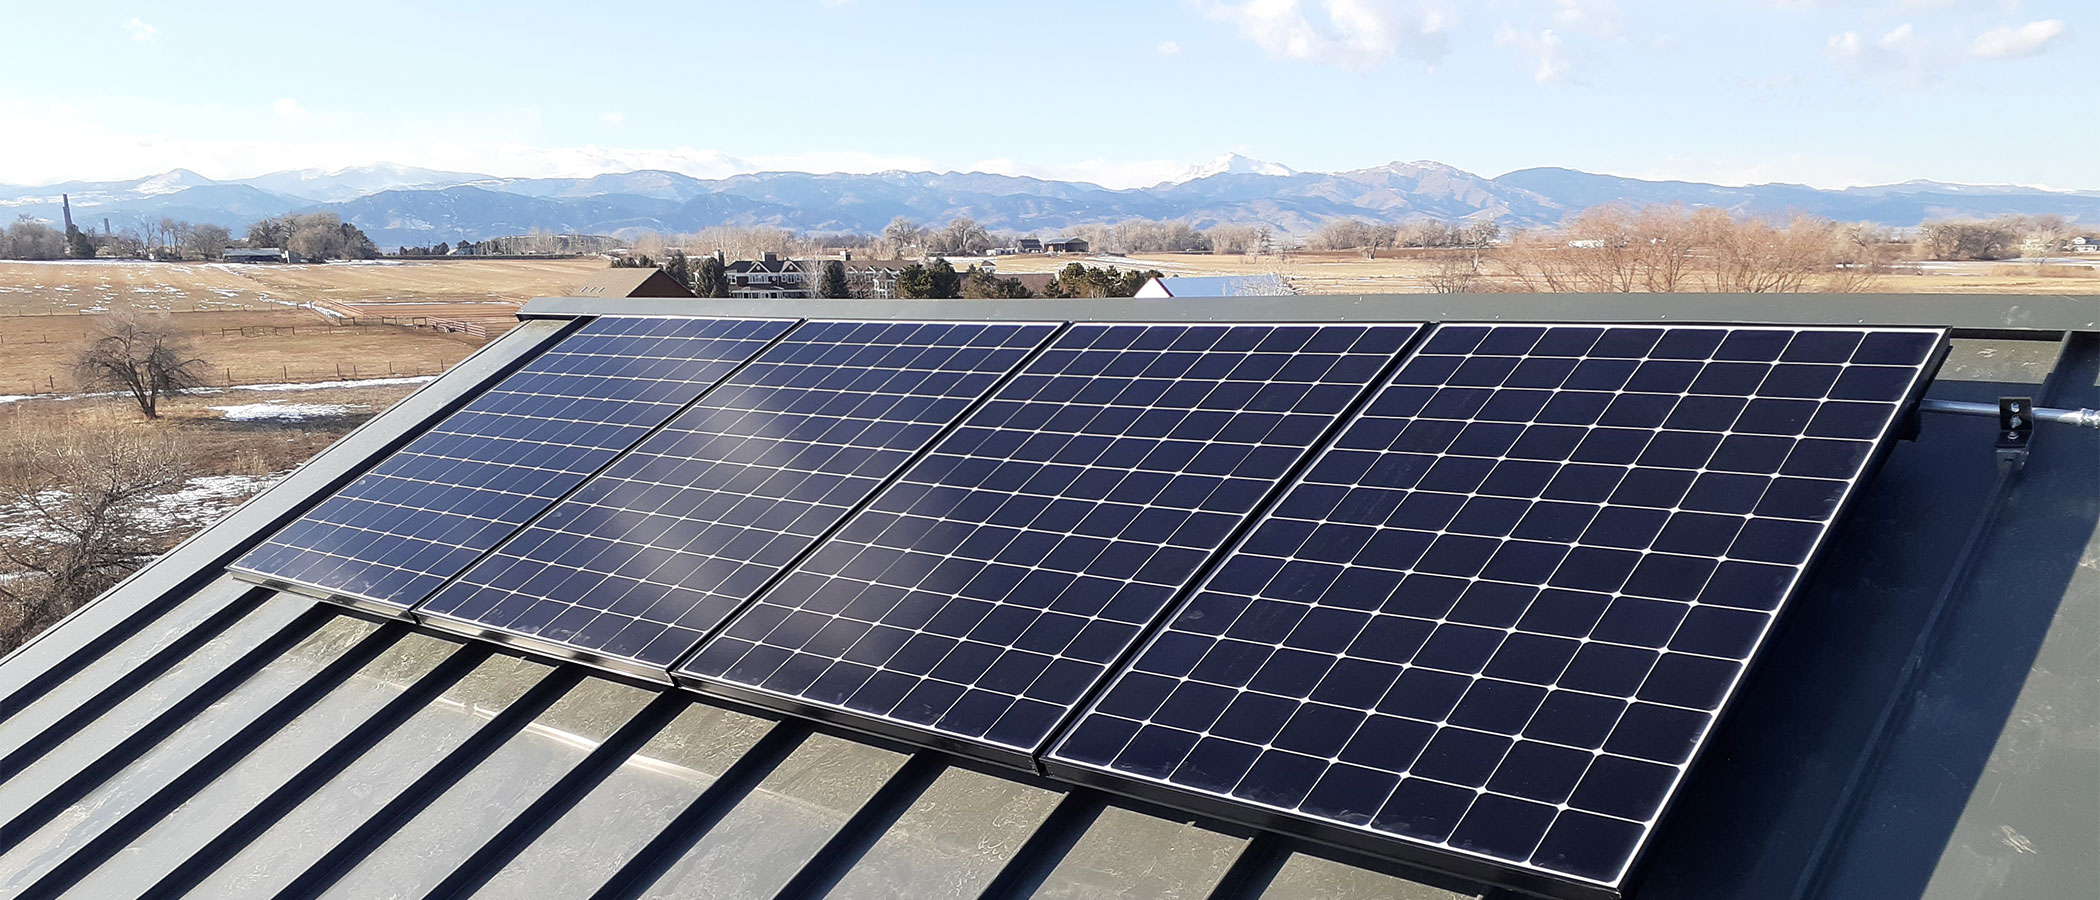 Roofstop solar panels